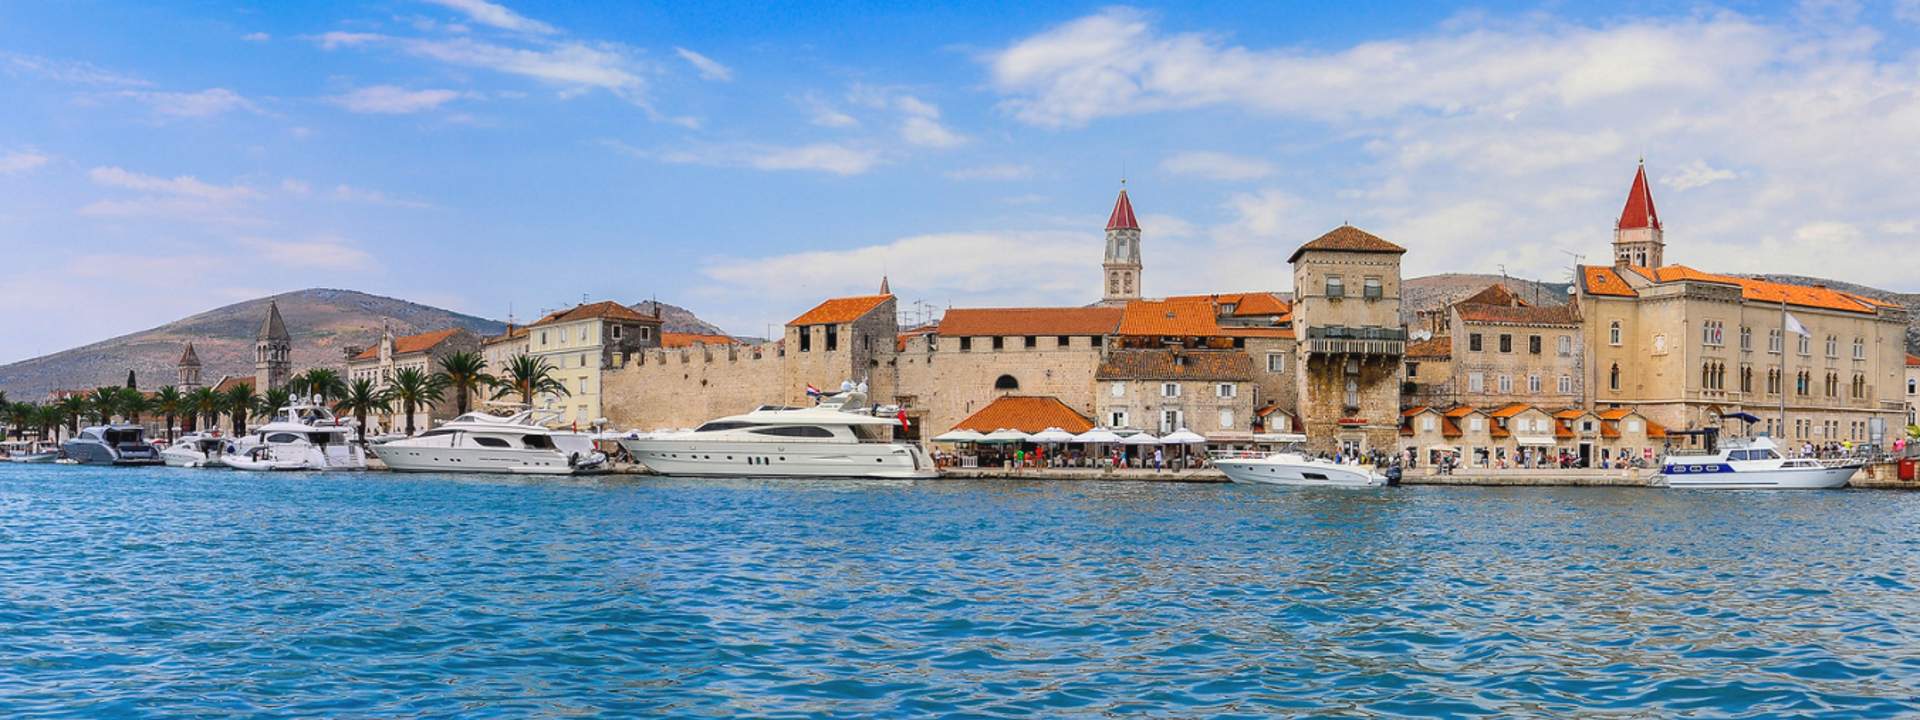 Explorez les îles croates à bord d'un catamaran privatisée